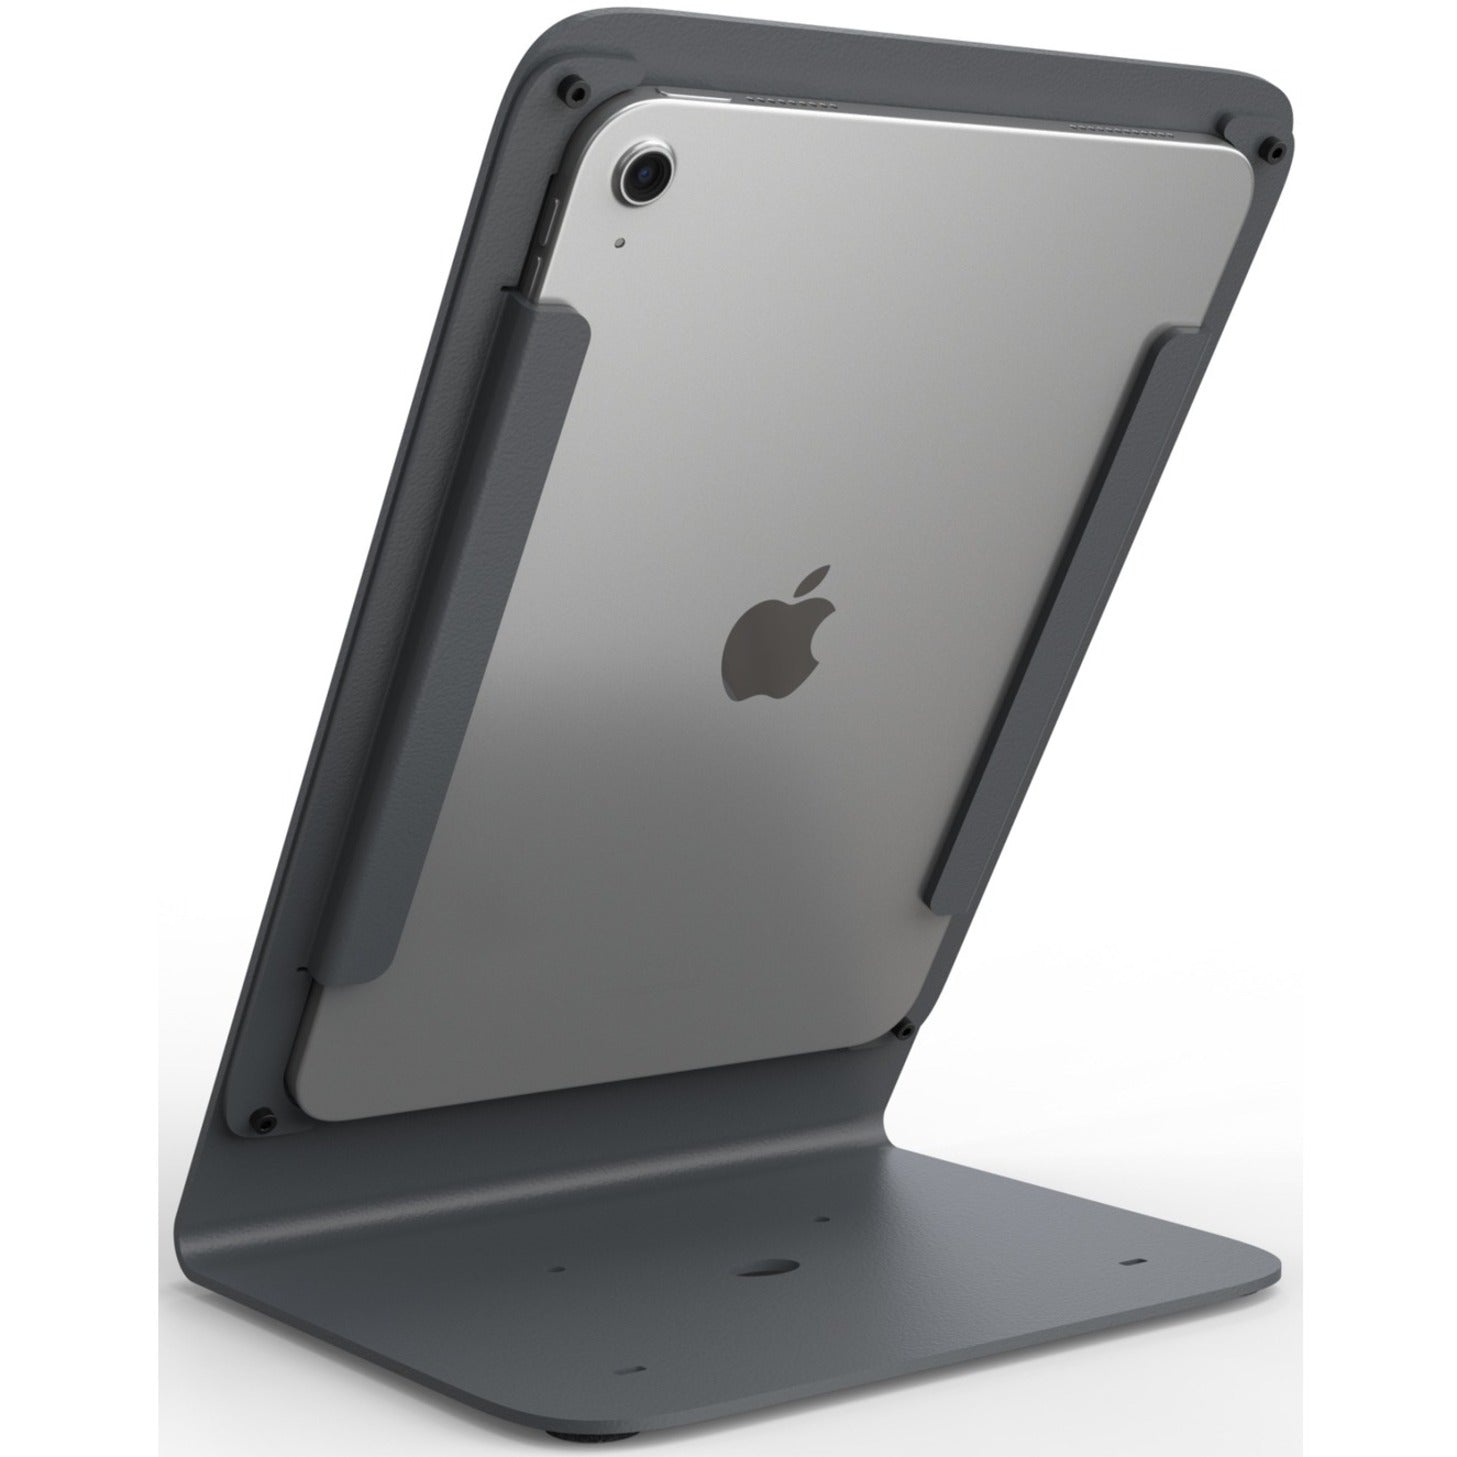 Heckler Design H759X-BG Portrait Stand for iPad 10th Generation, Fingerprint Resistant, Kensington Slot, Durable, Scratch Resistant